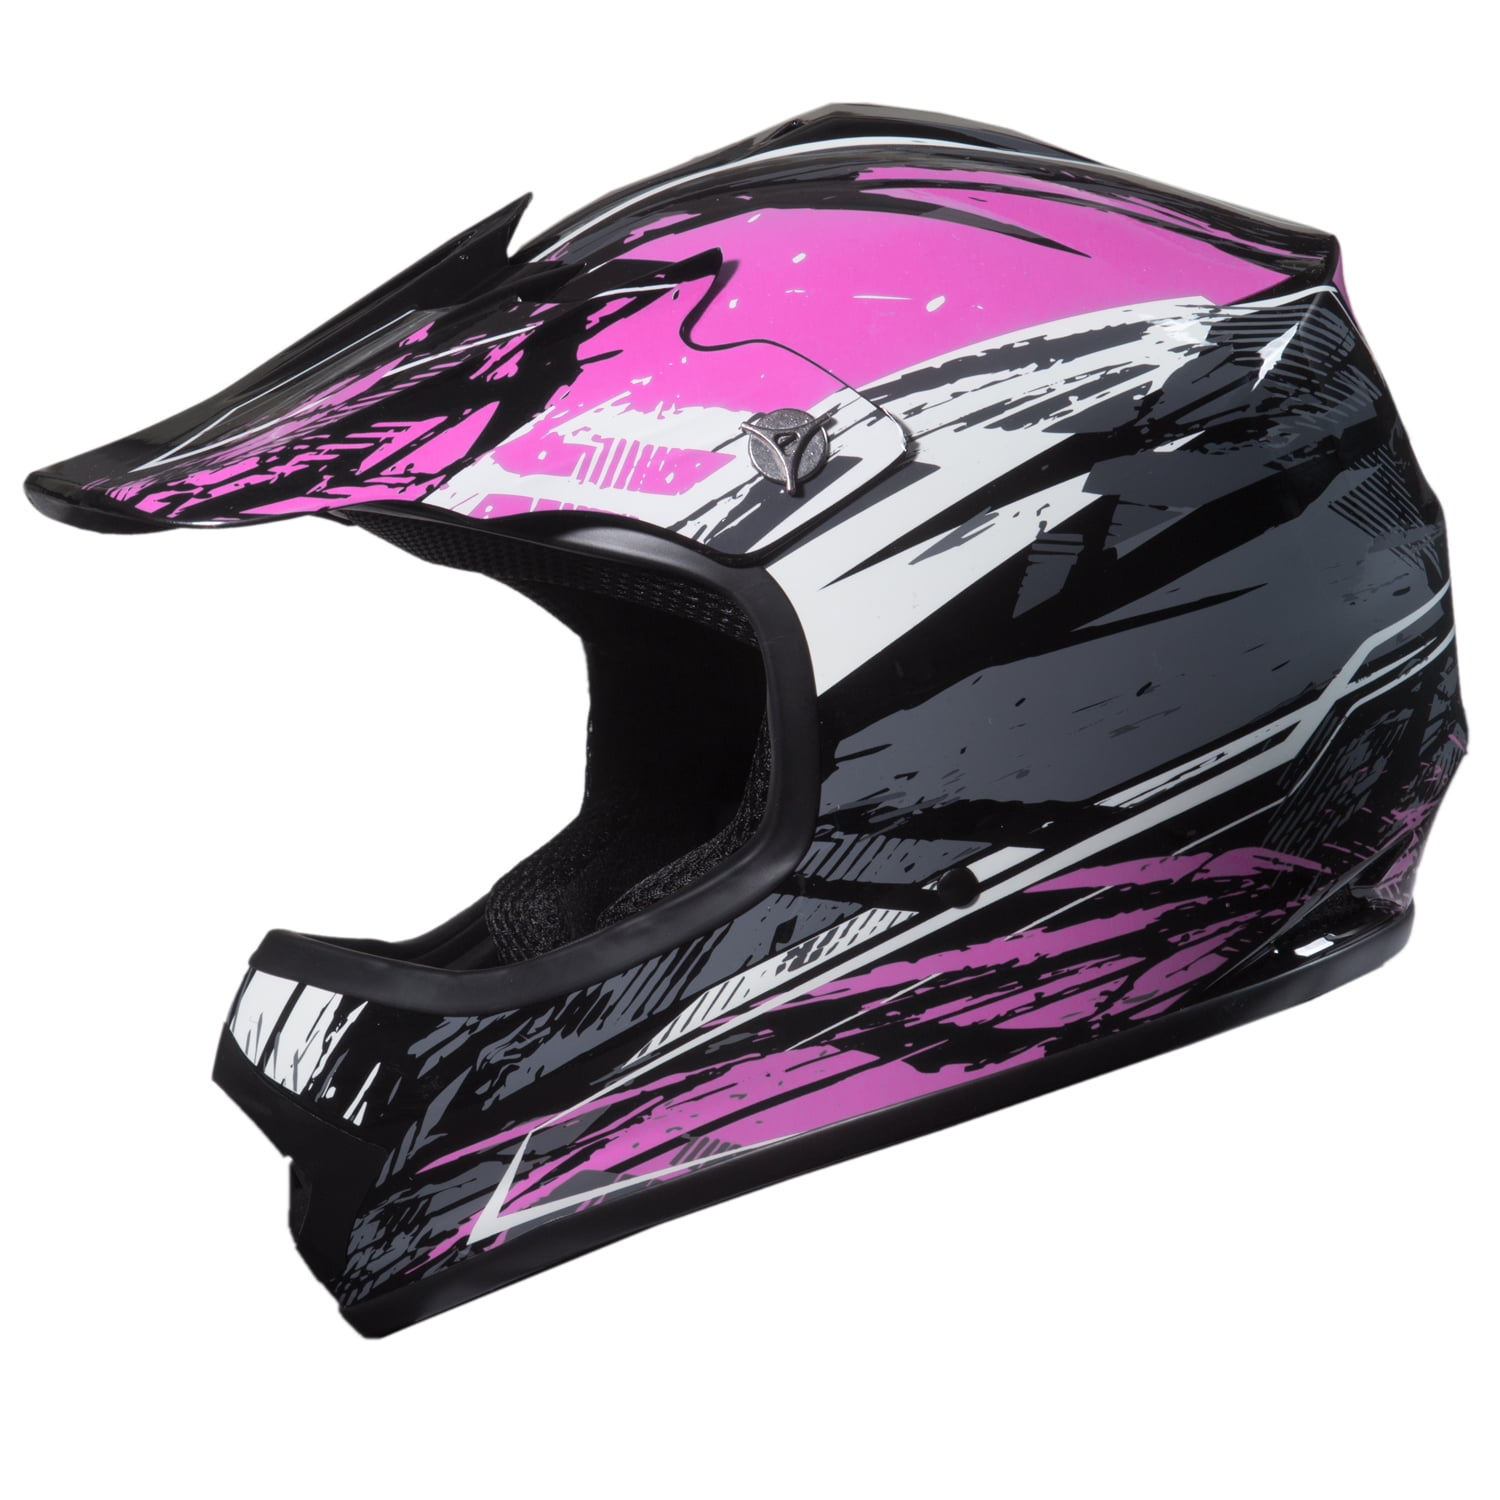 Wulfsport Cub Off Road Pro Motocross Helmet Kids Motorcross ATV Crash Lid Pink